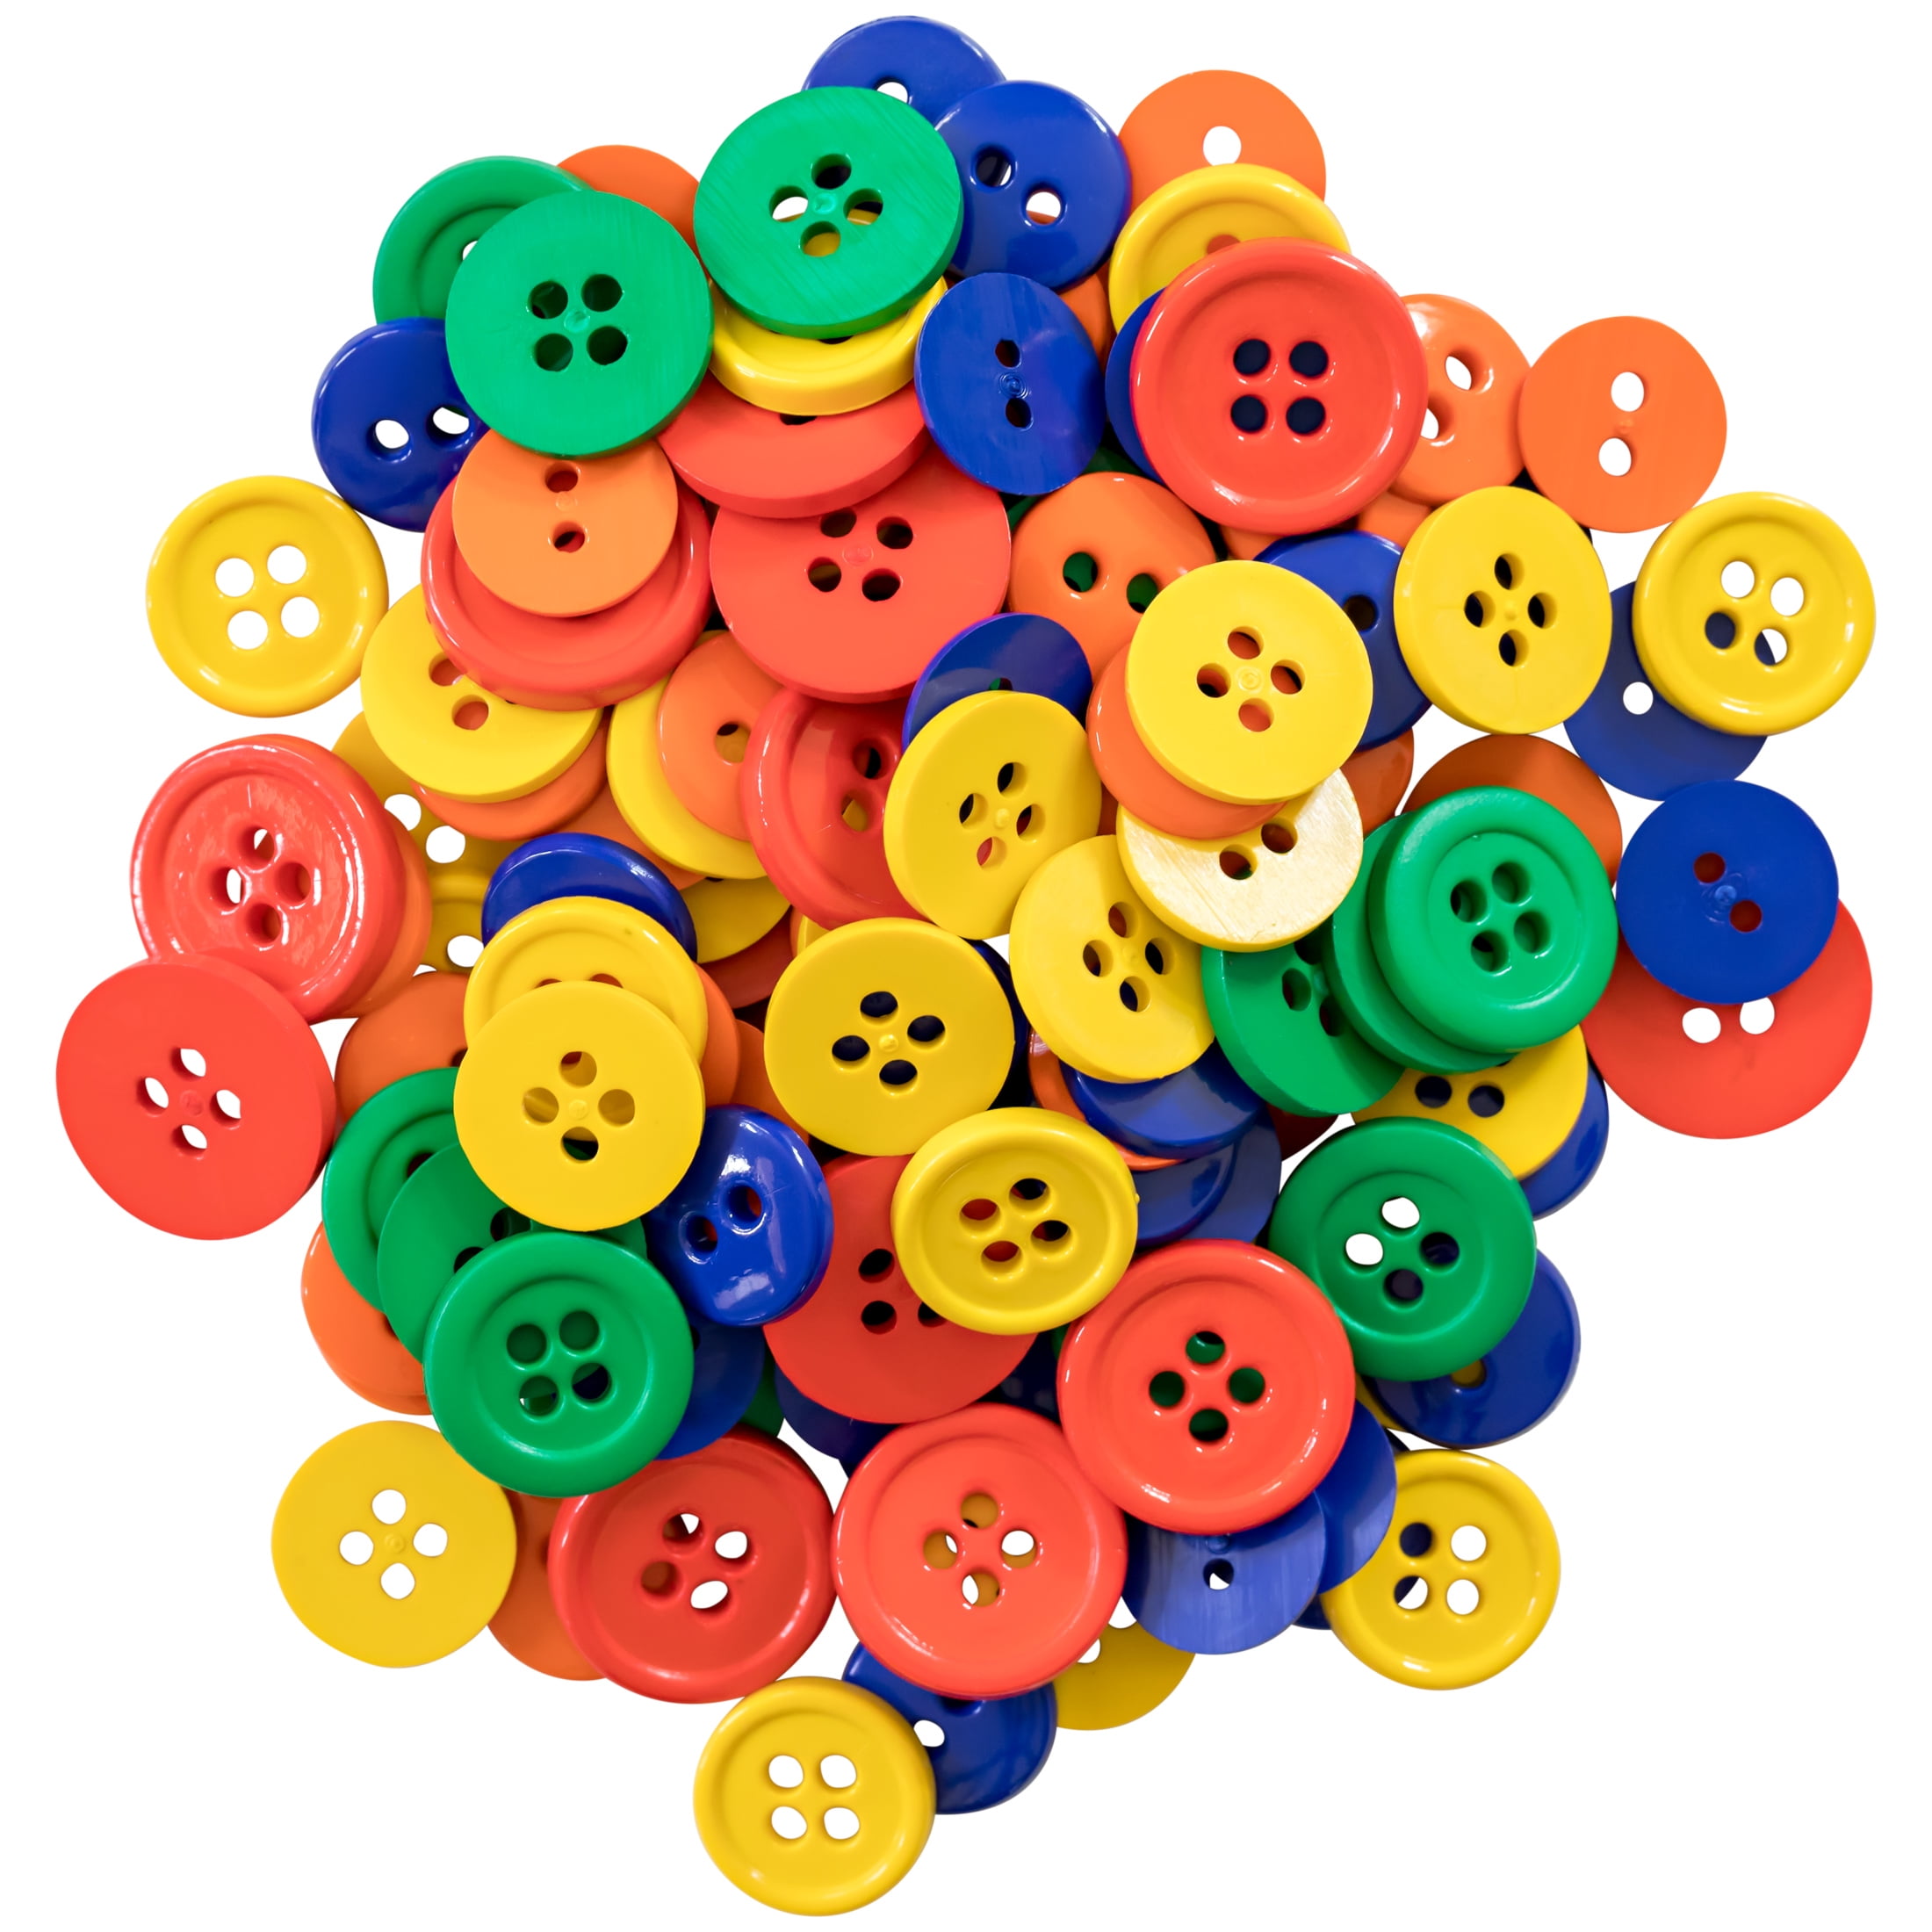 Blur Mix Assorted Buttons Crafts Stock Photo 1098968060